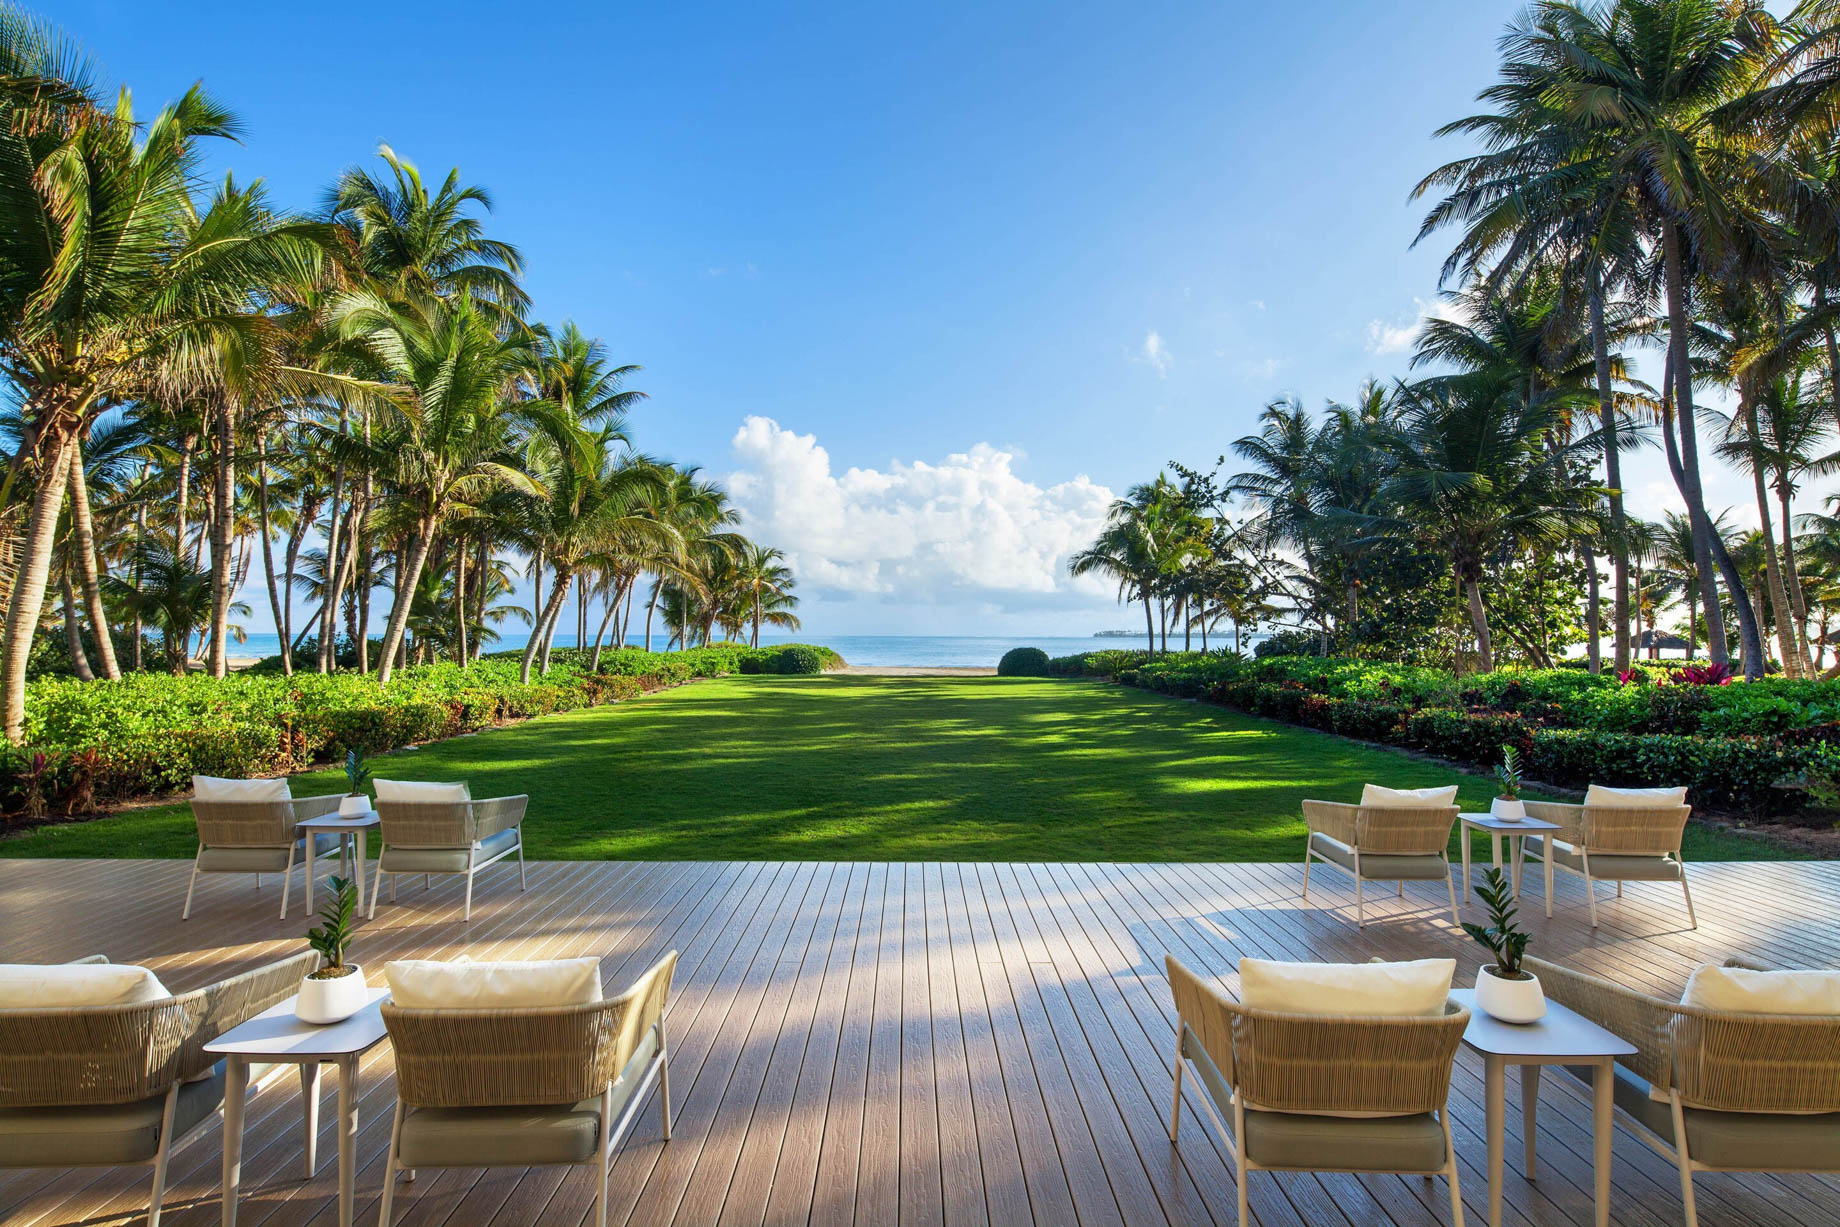 The St. Regis Bahia Beach Resort – Rio Grande, Puerto Rico – Casa Grande Lawn